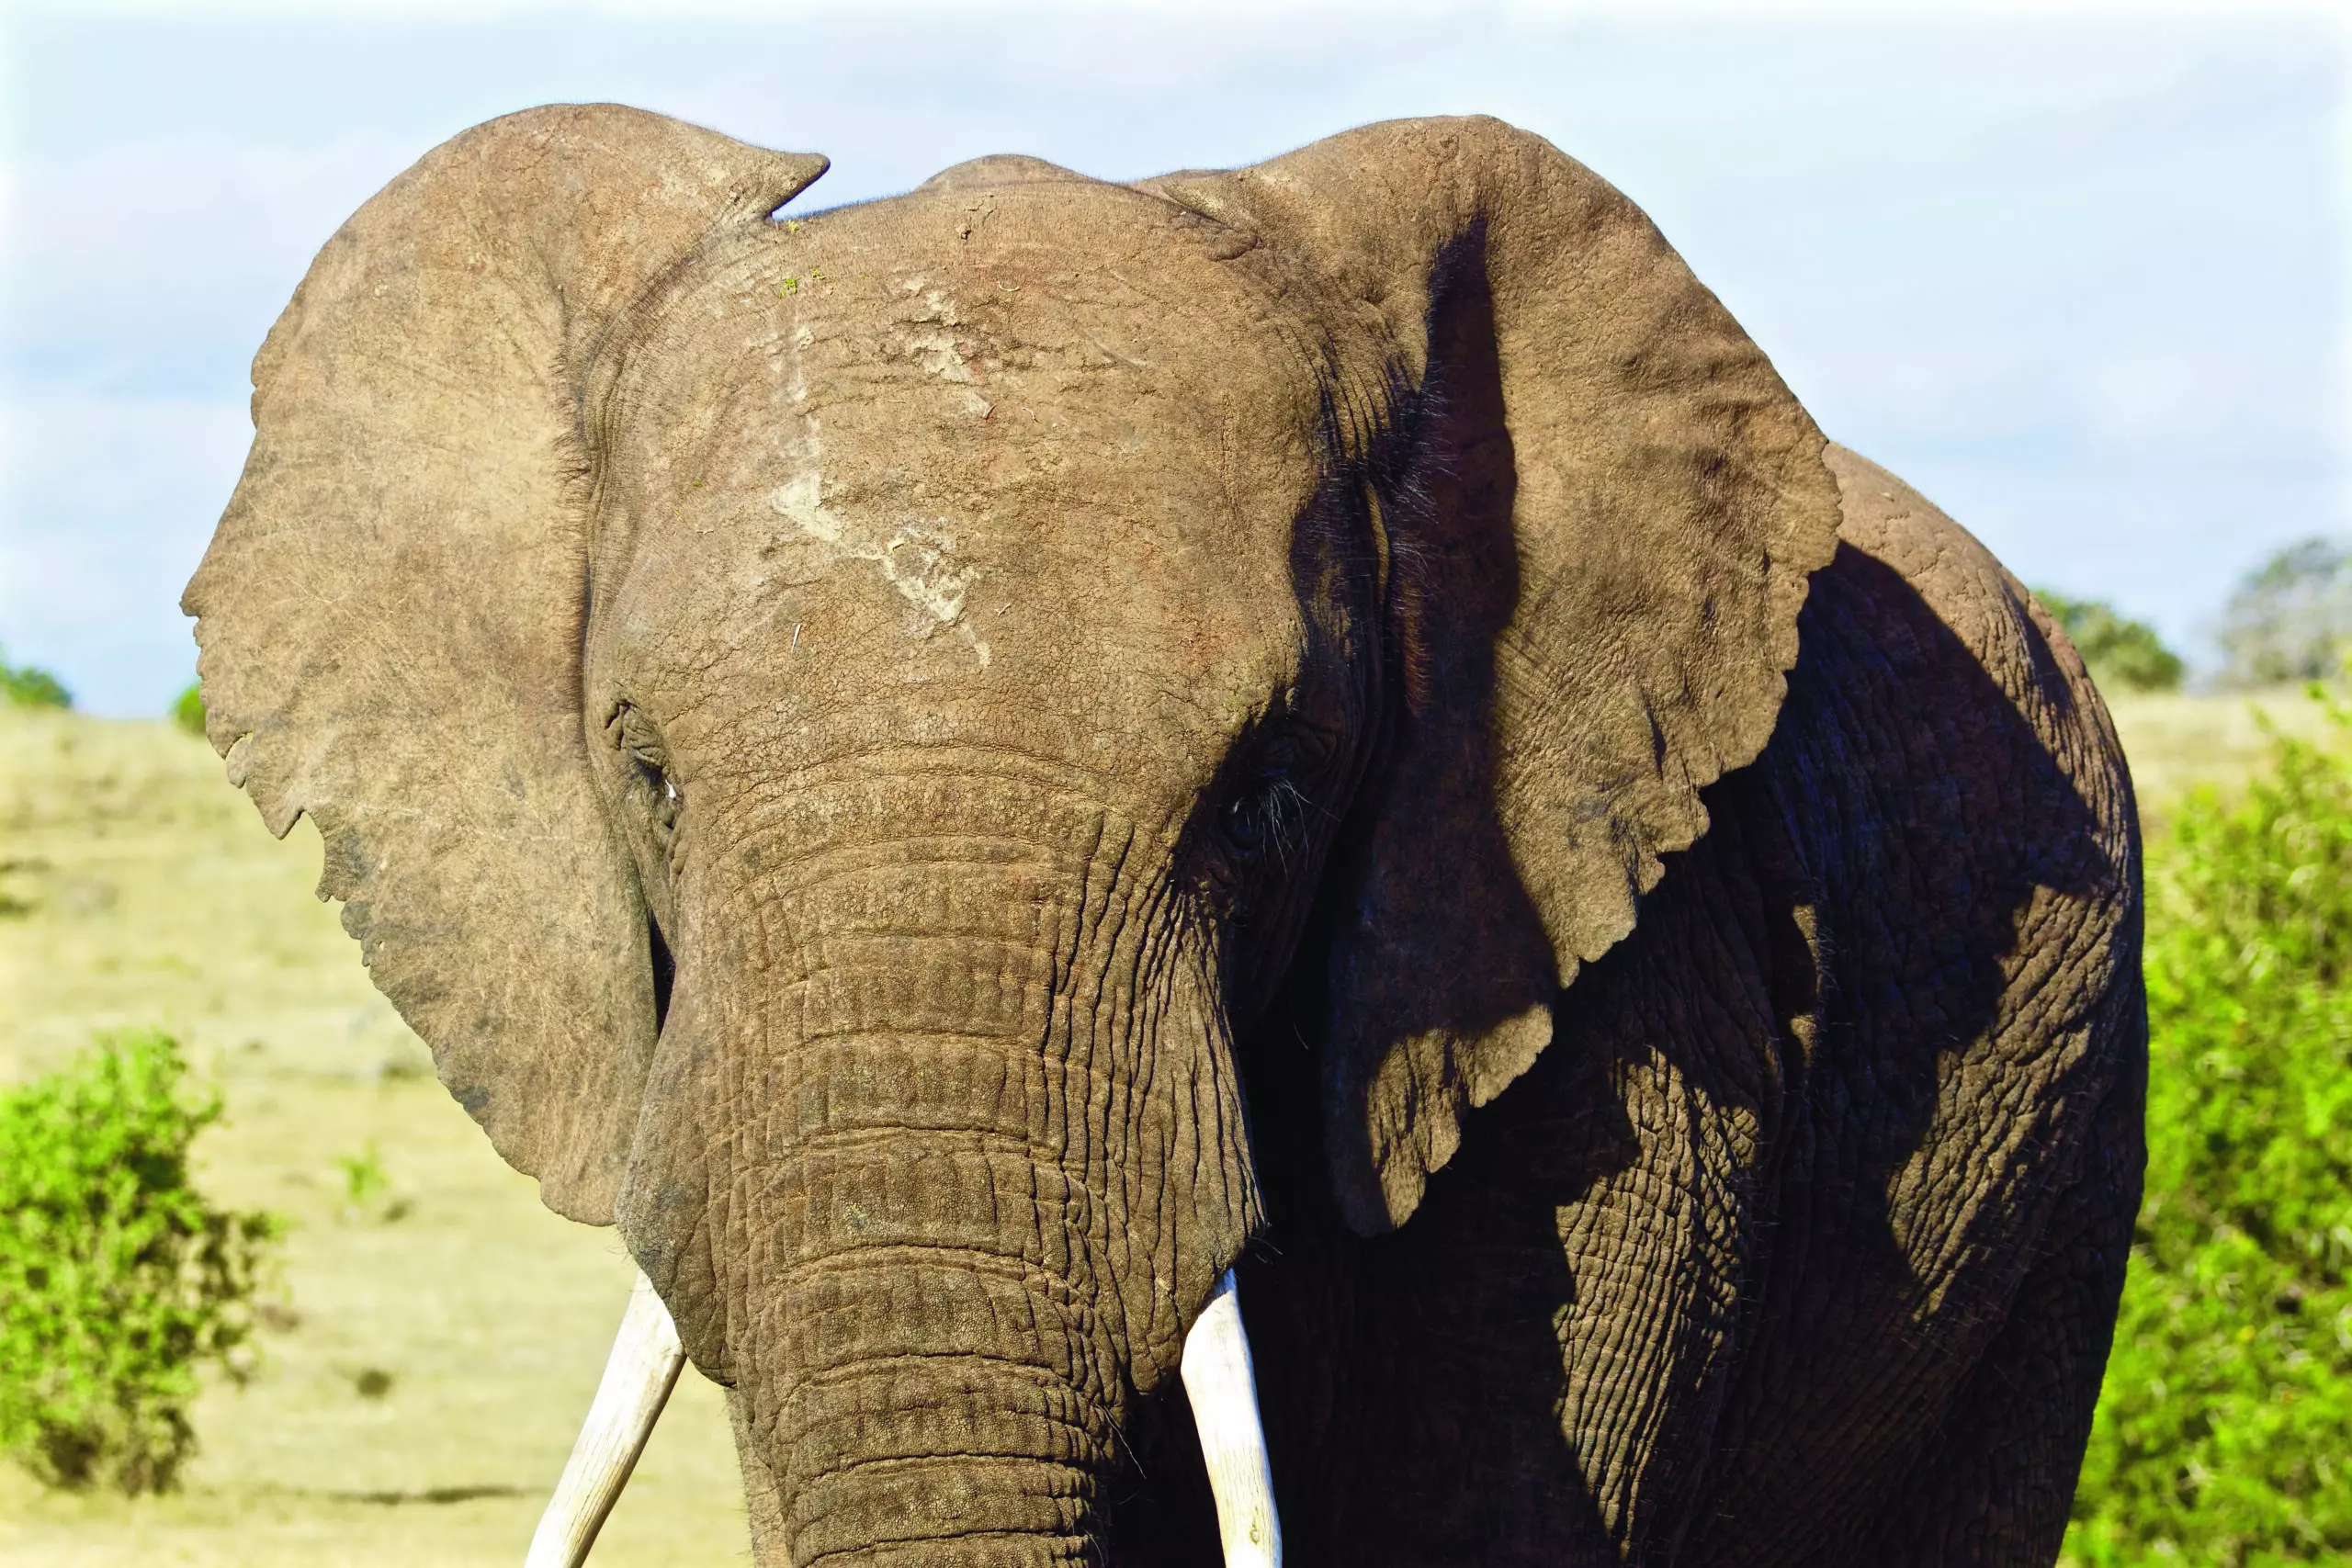 Wandbild (3444) Elephant 12 präsentiert: Tiere,Aus Afrika